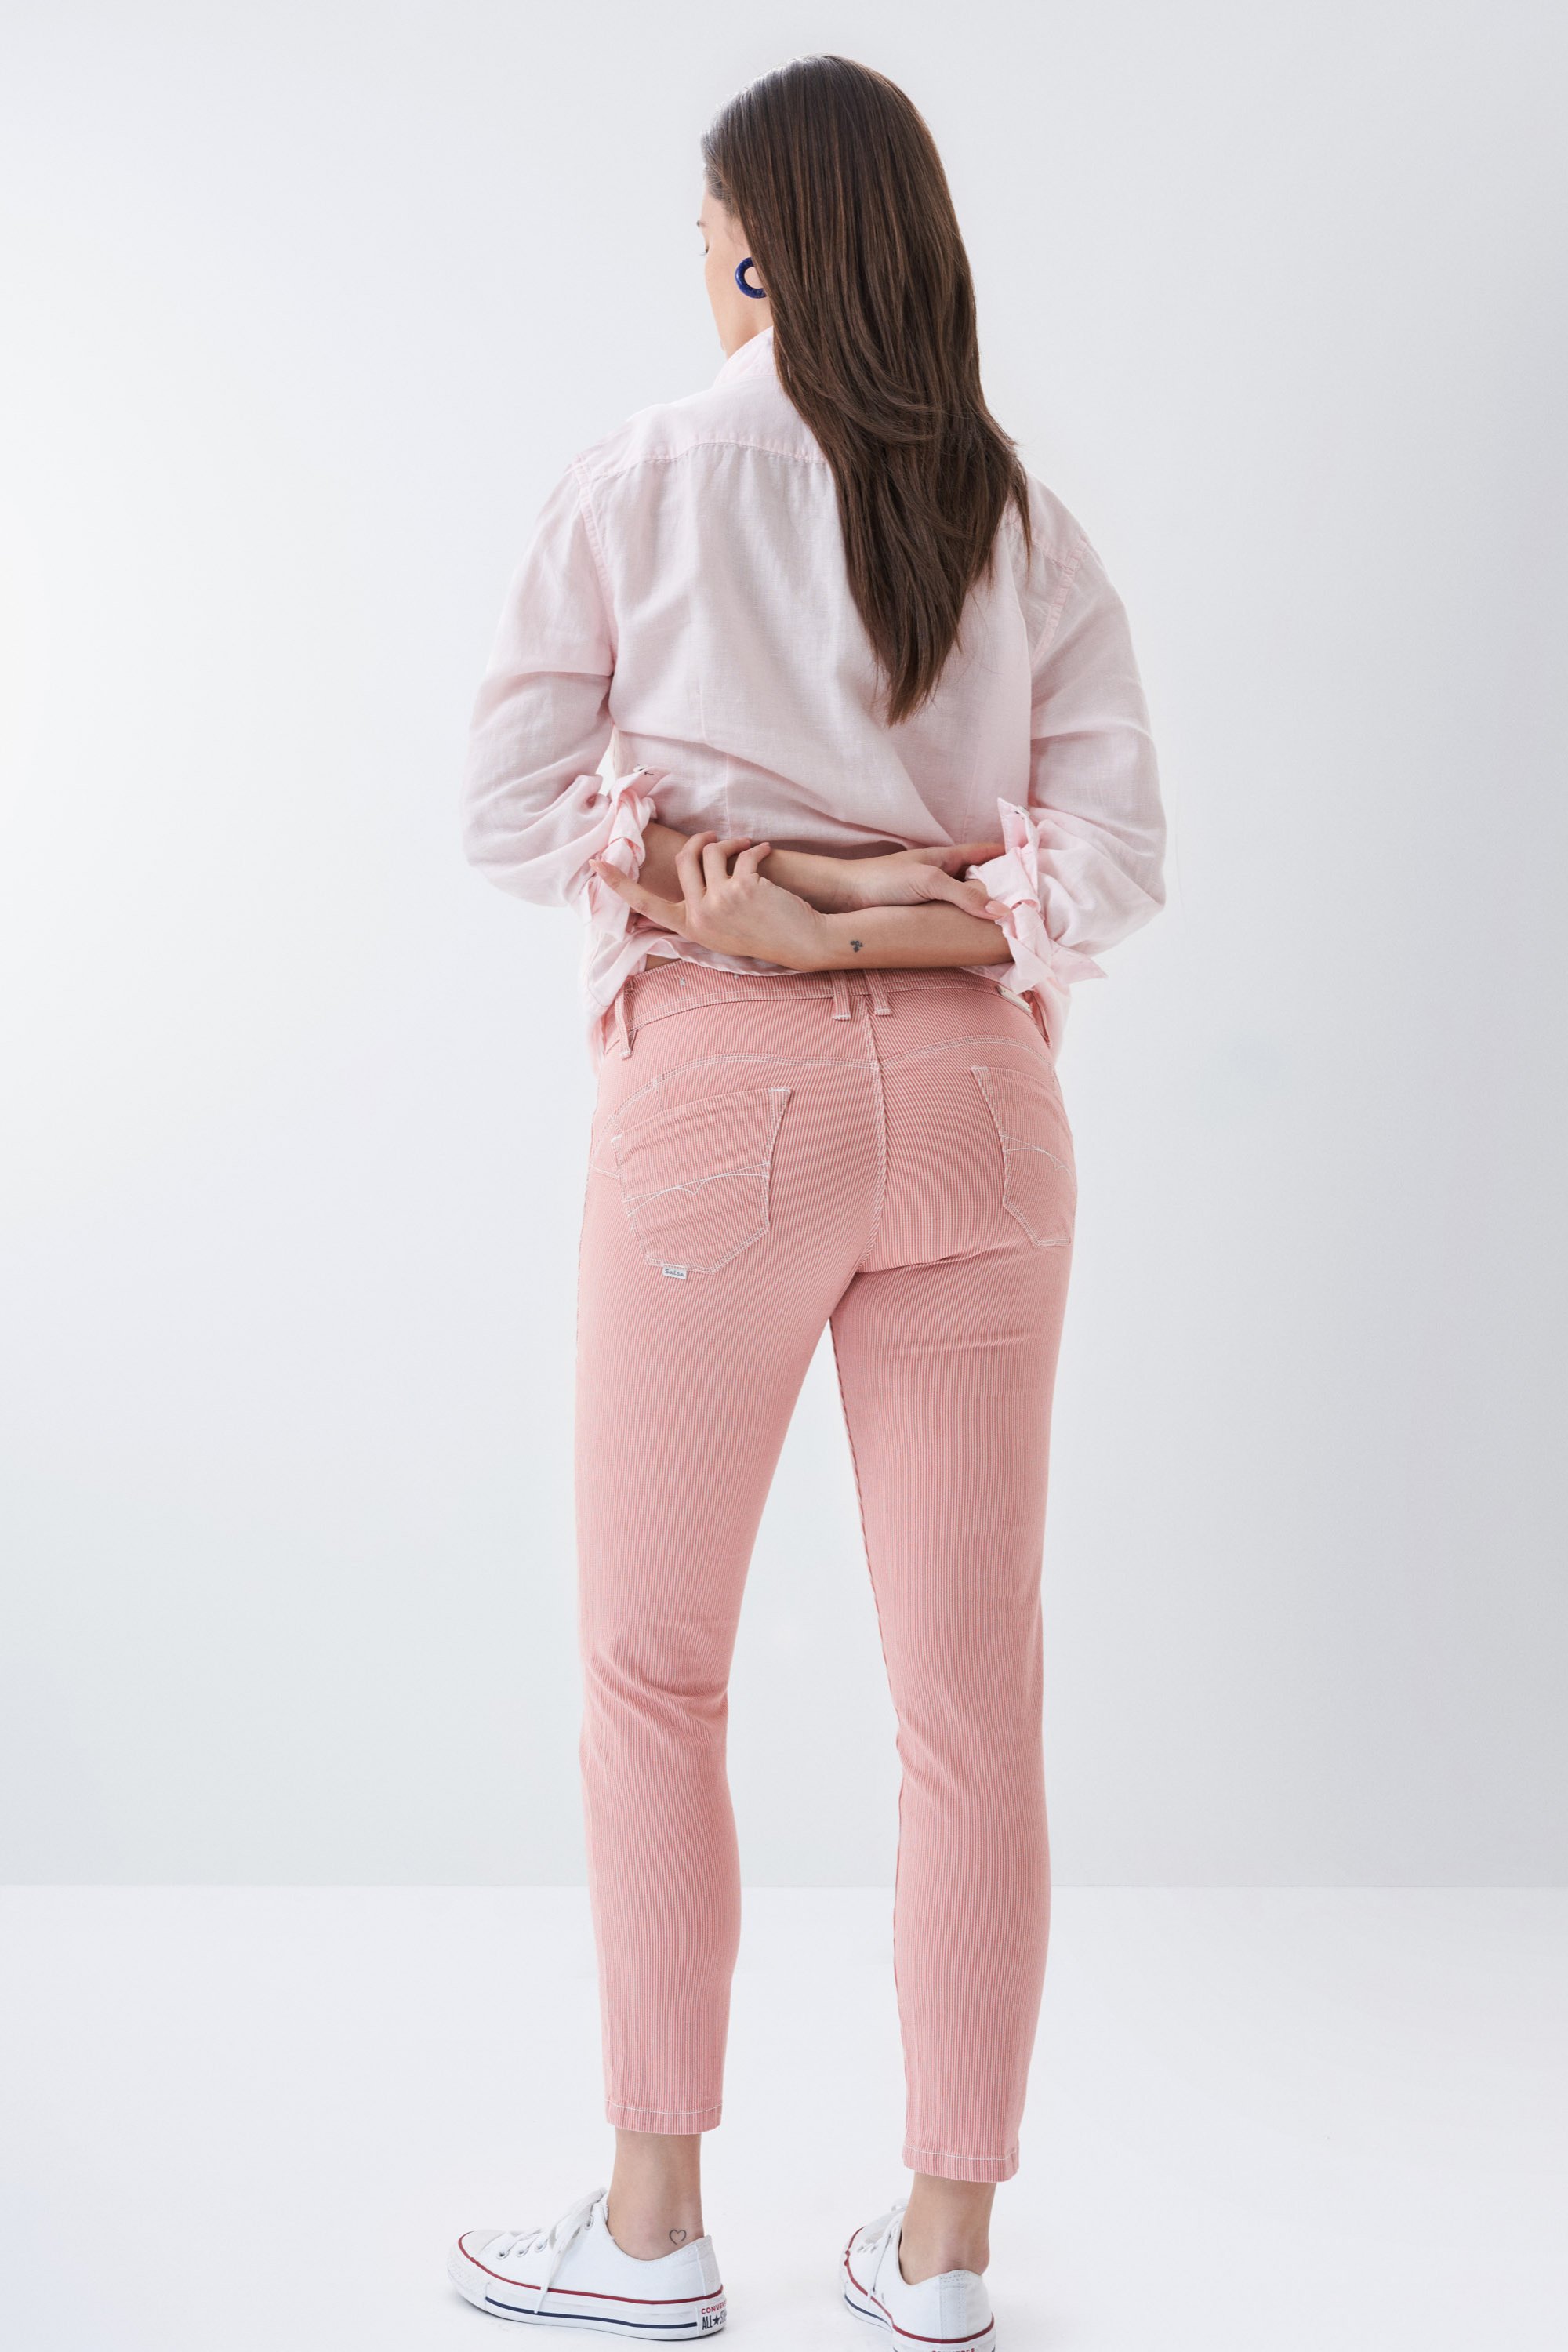 Pastel pink skinny jeans | HOWTOWEAR Fashion